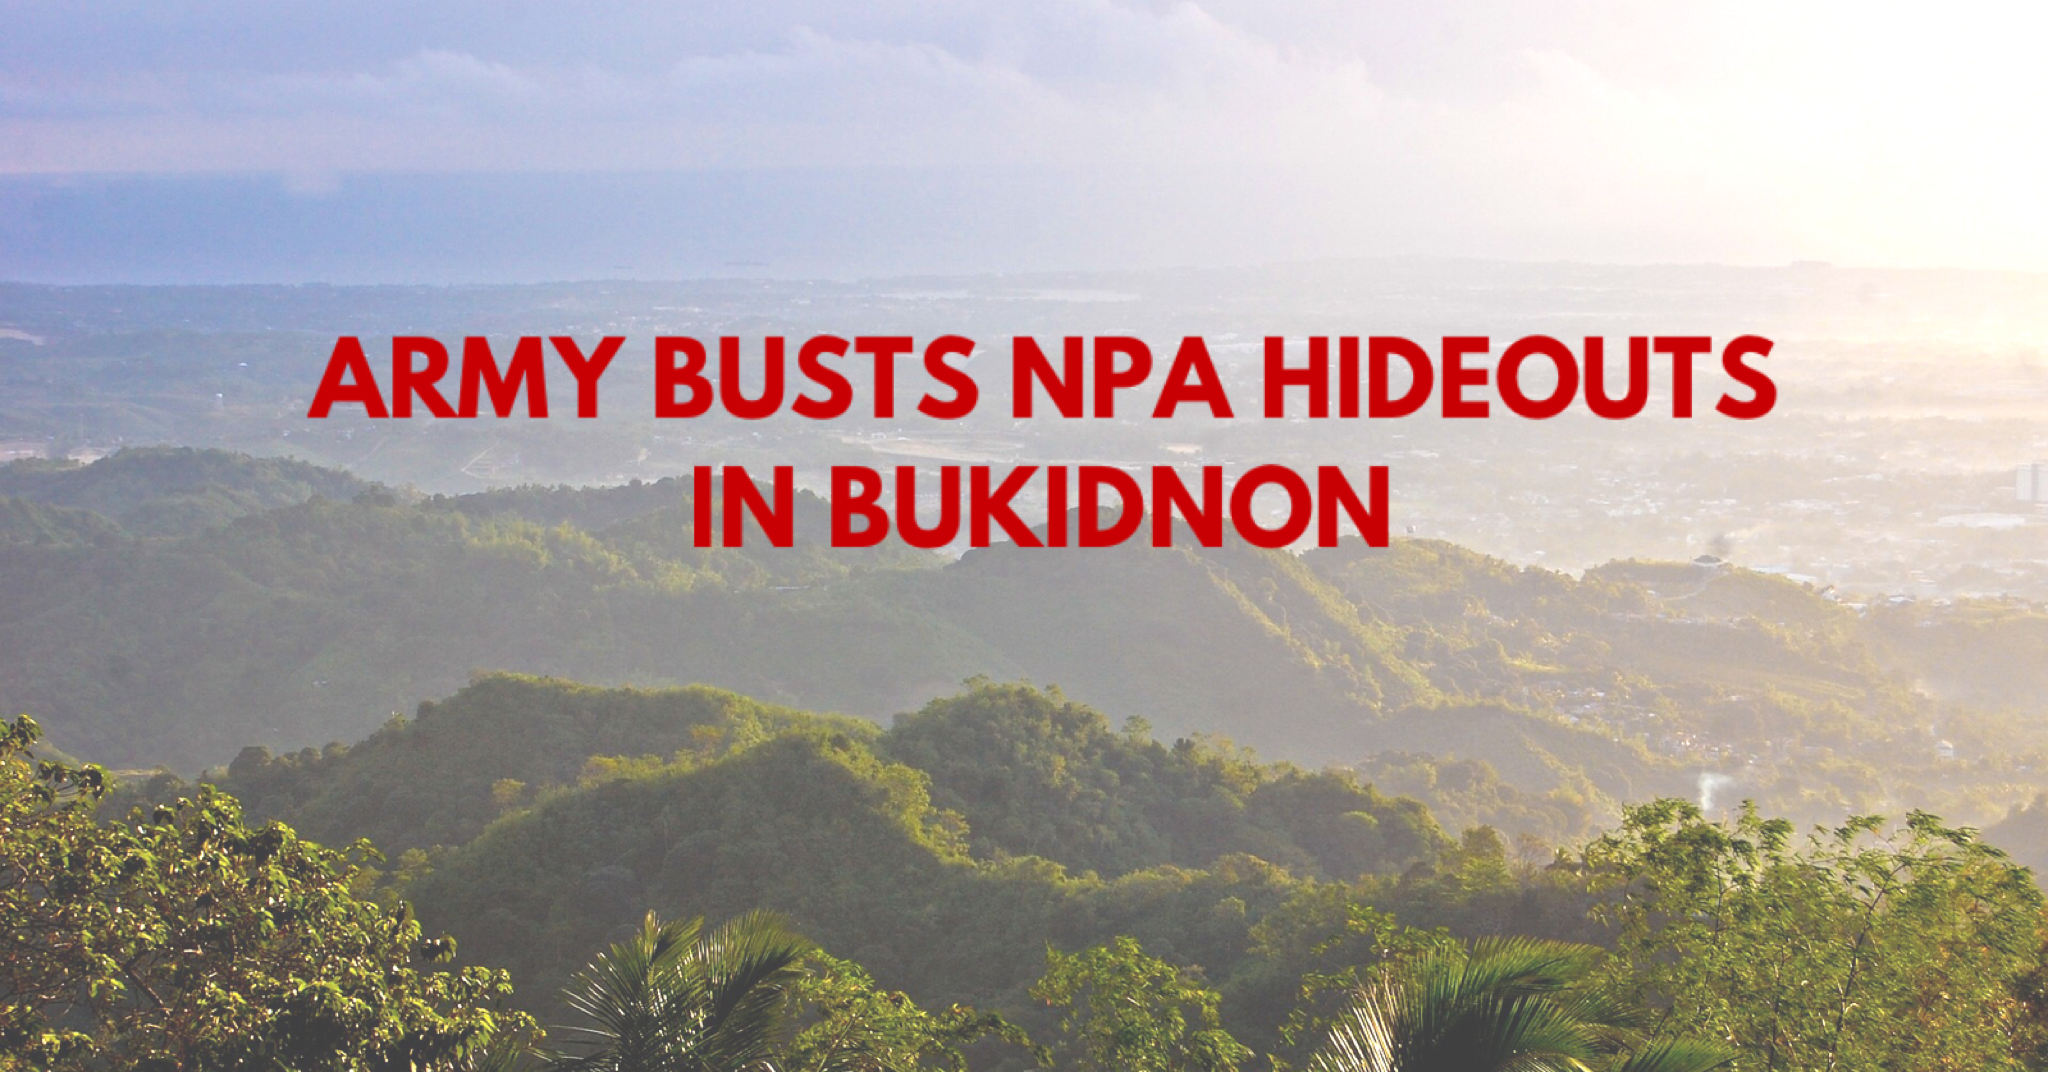 403rd Brigade busts NPA hideouts in Bukidnon